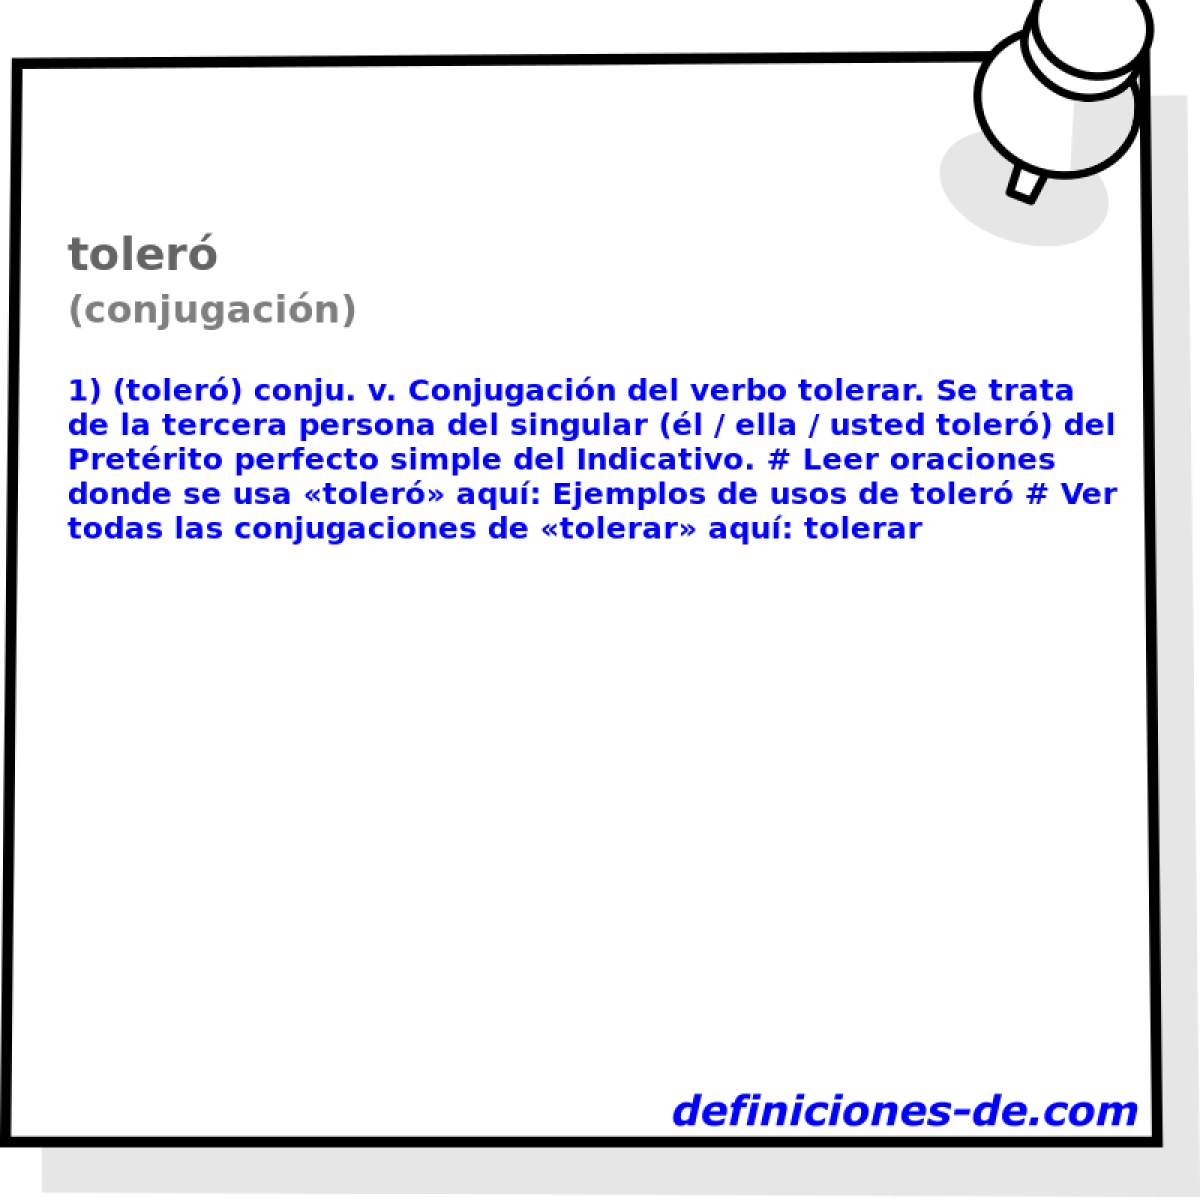 toler (conjugacin)